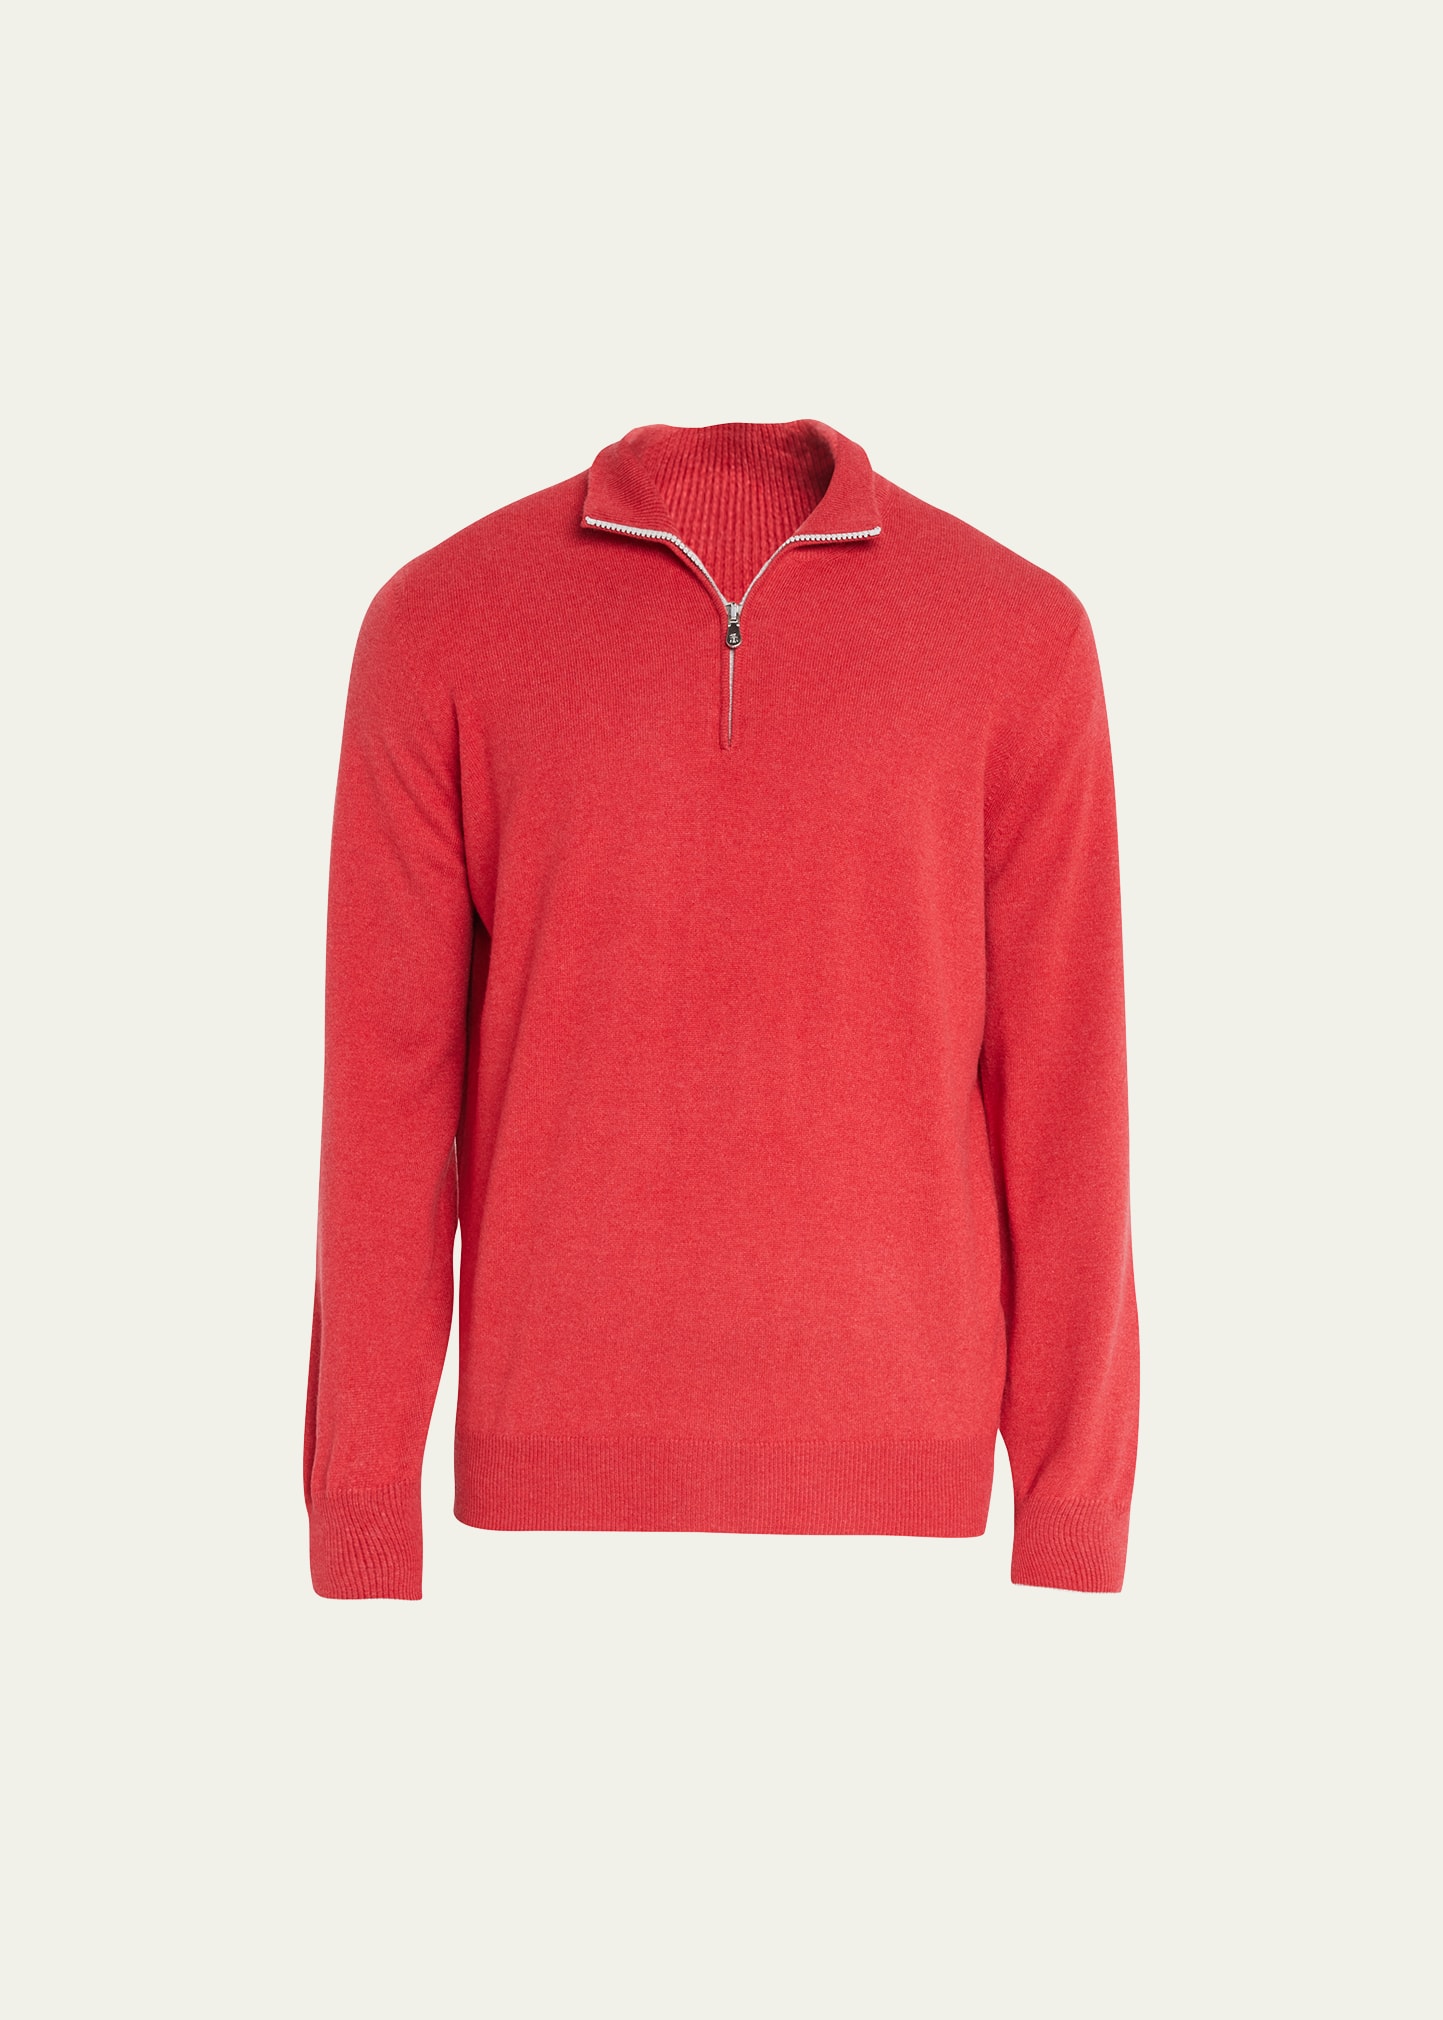 Brunello Cucinelli Men's Cashmere Half-Zip Sweater